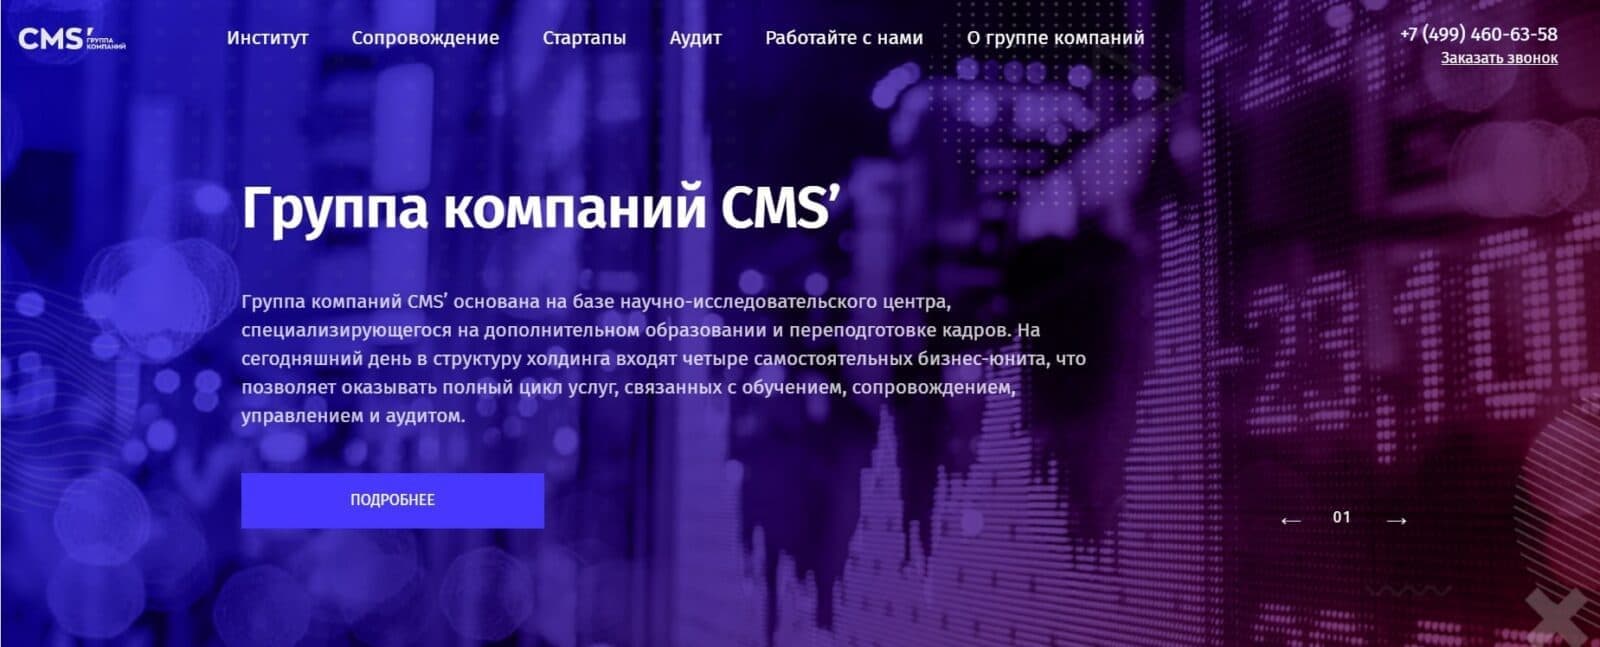 Сайт Группы Компаний Cms